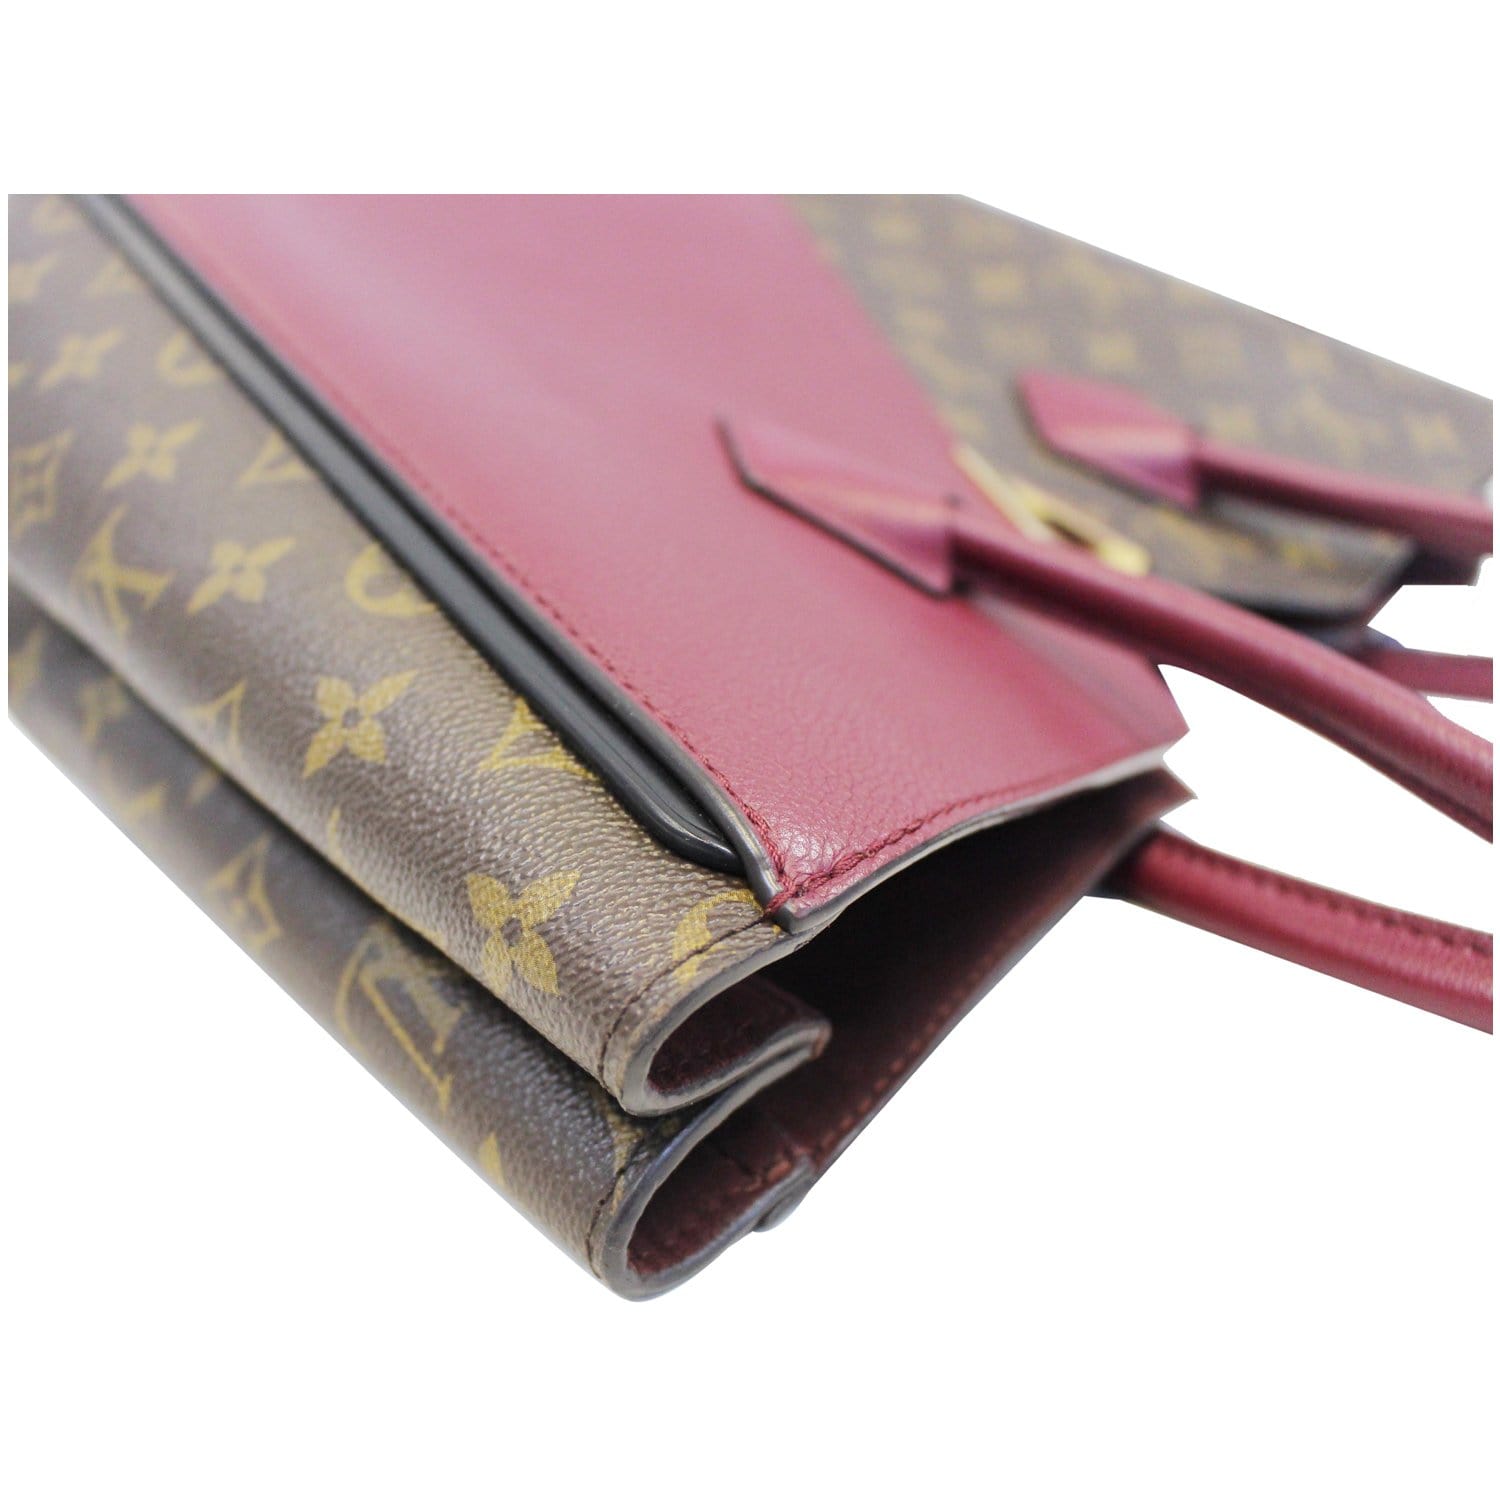 Lv kimono wallet｜TikTok Search